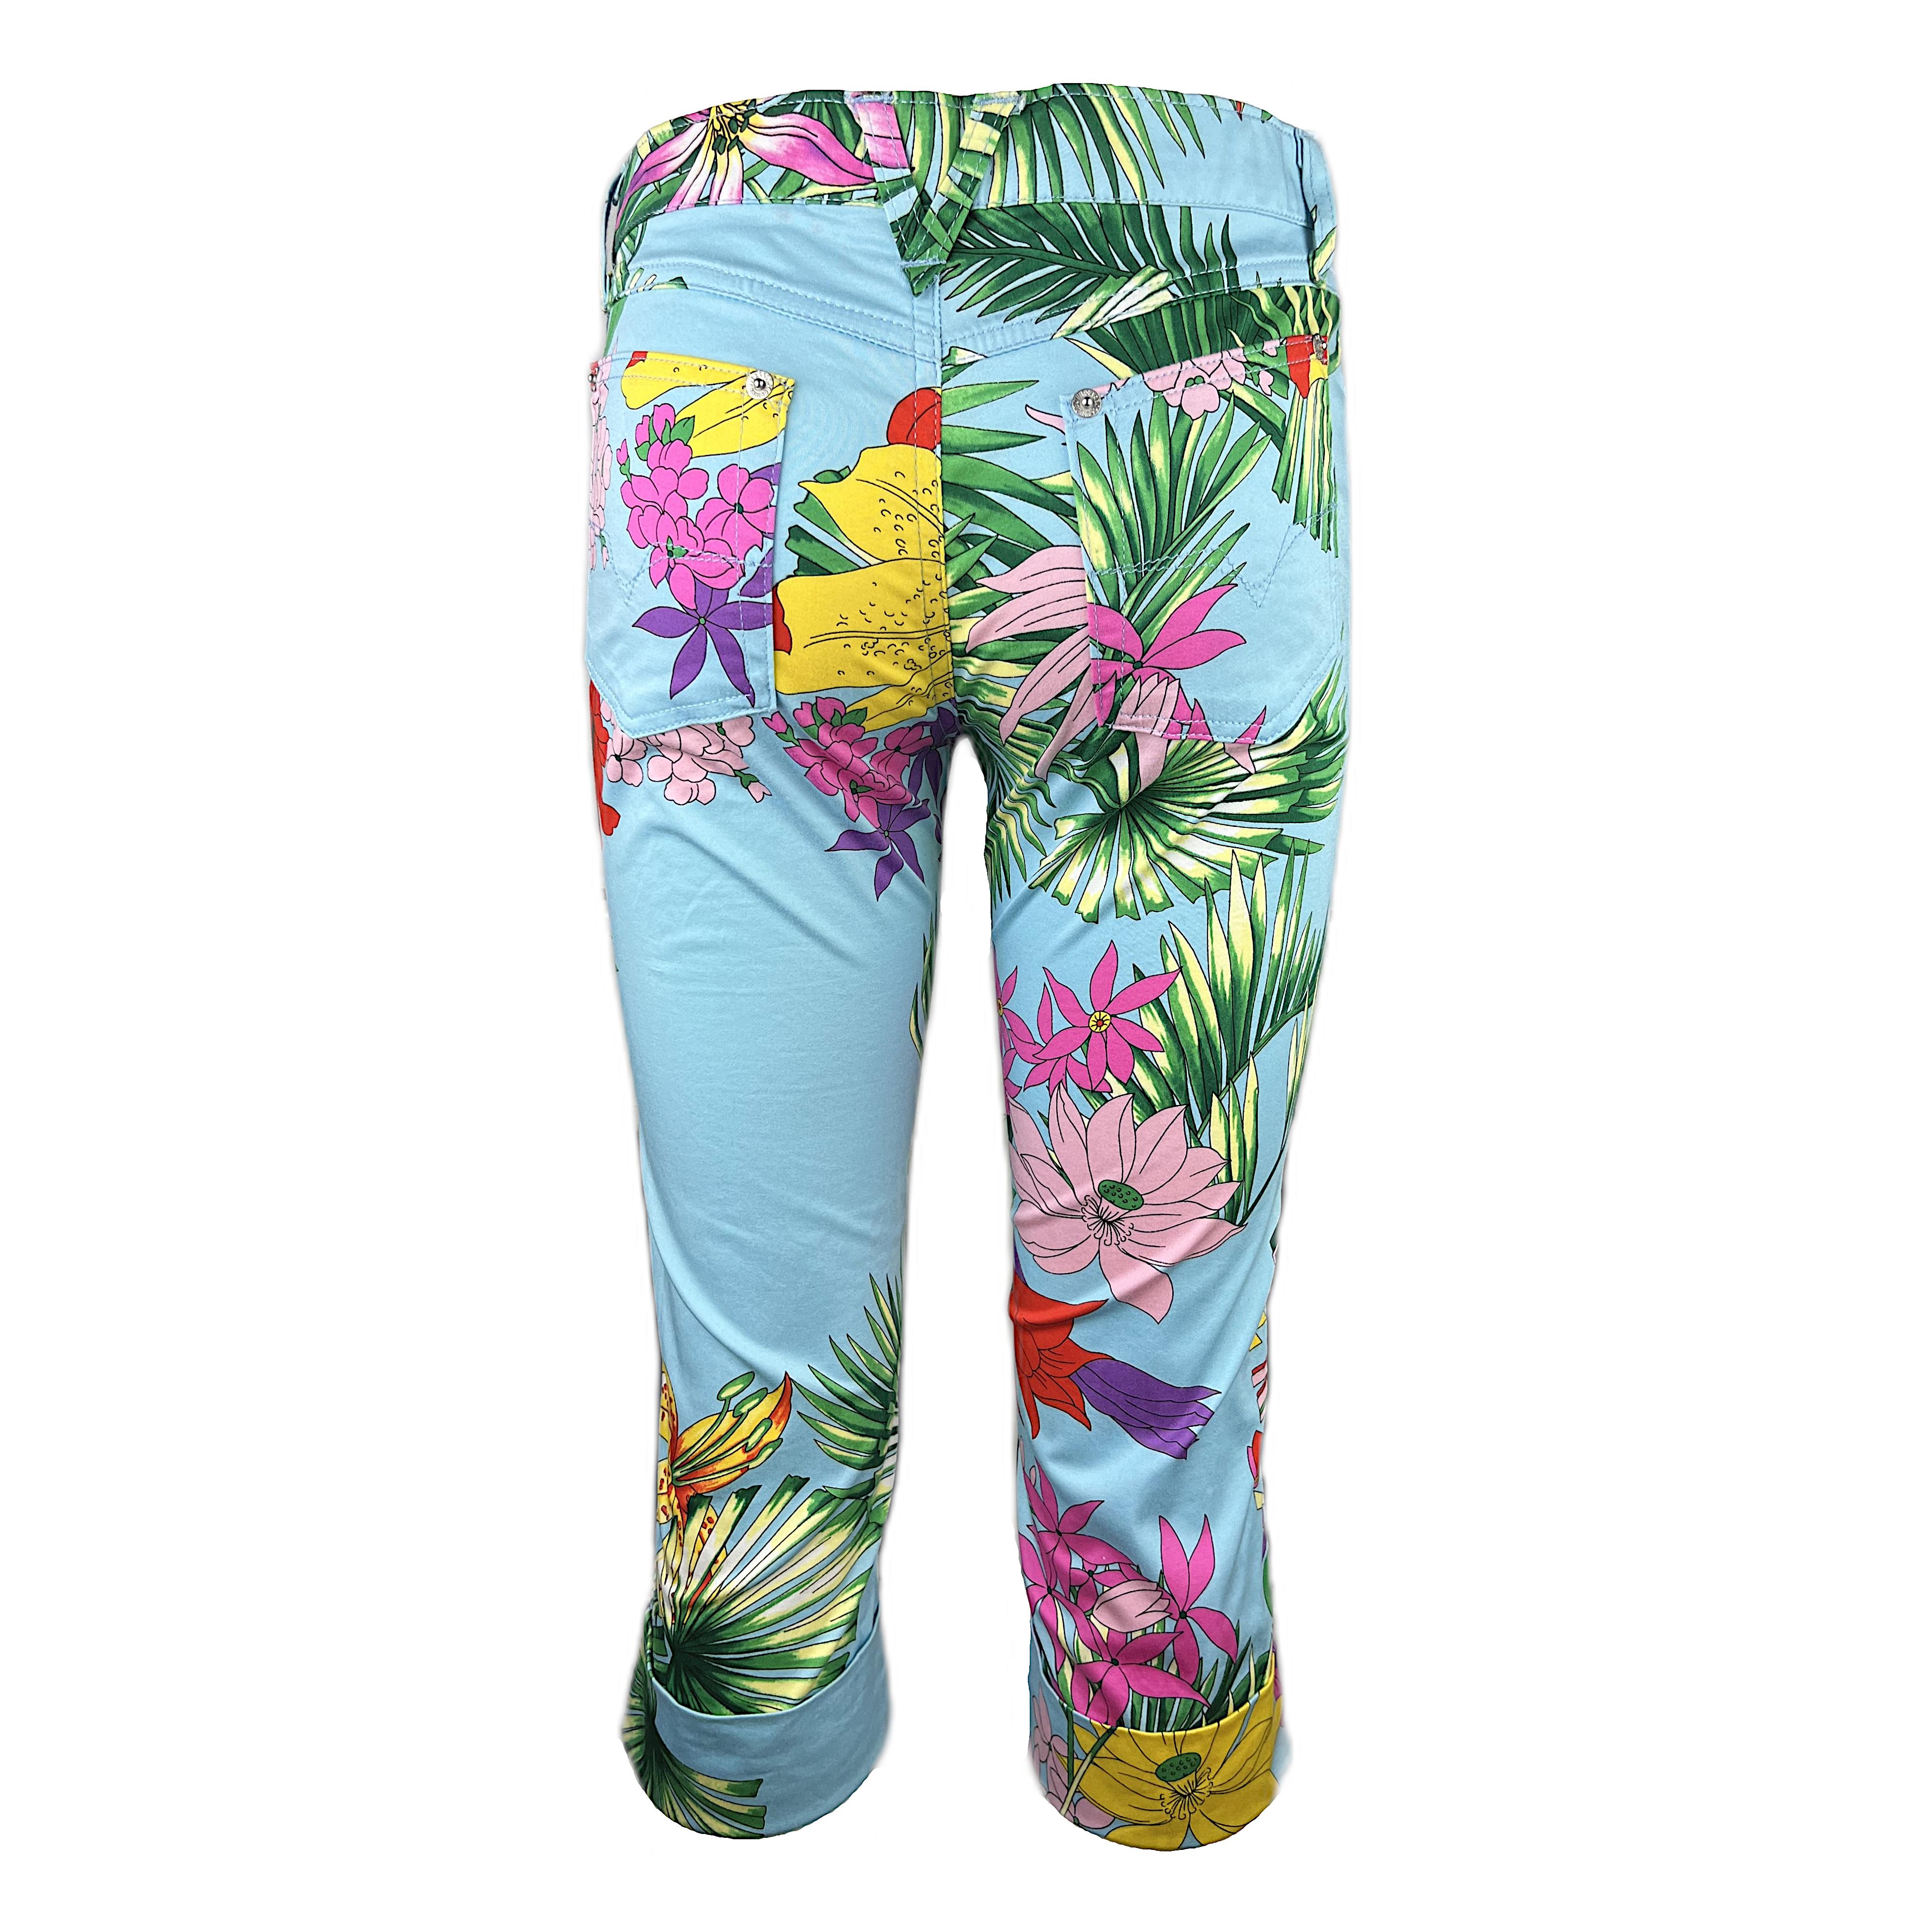 Gray VERSACE JEANS COUTURE – Capri Pants with Tropical Floral Print  Size 6US 38EU